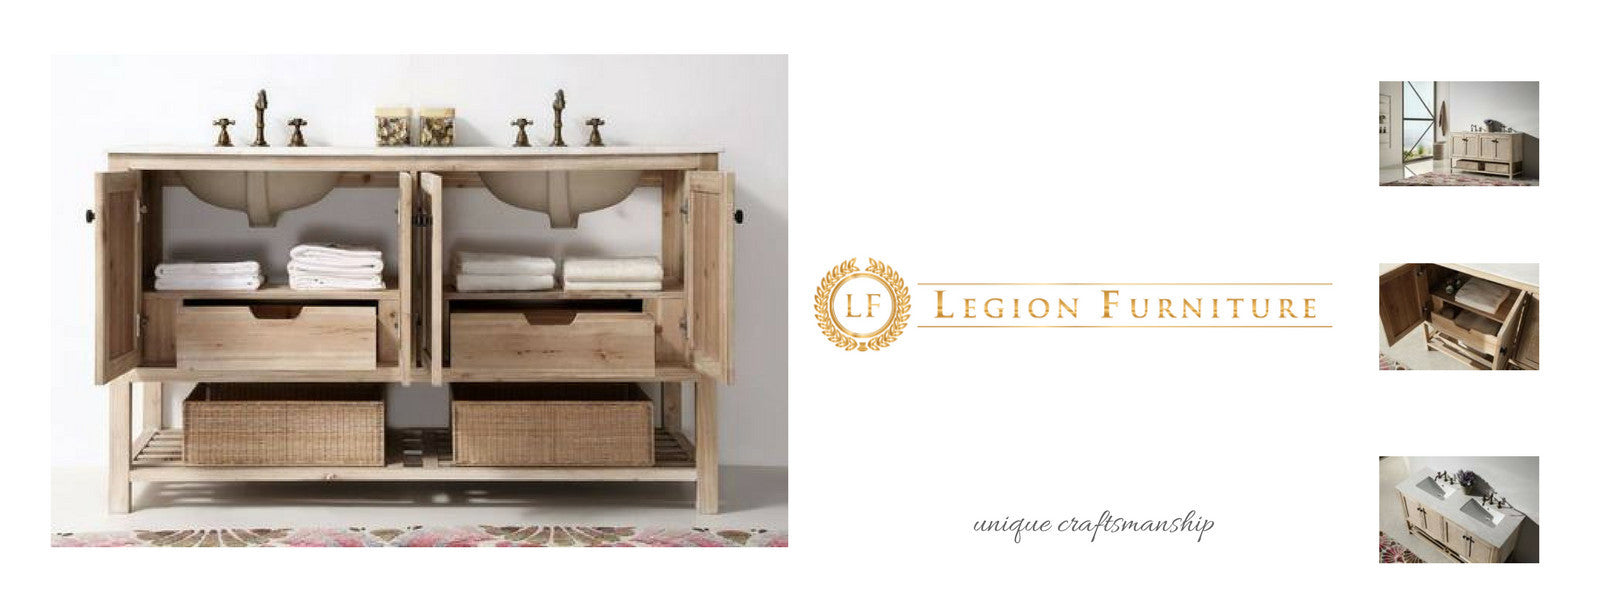 Legion Furniture Bathroom Bathtubs and Vanities